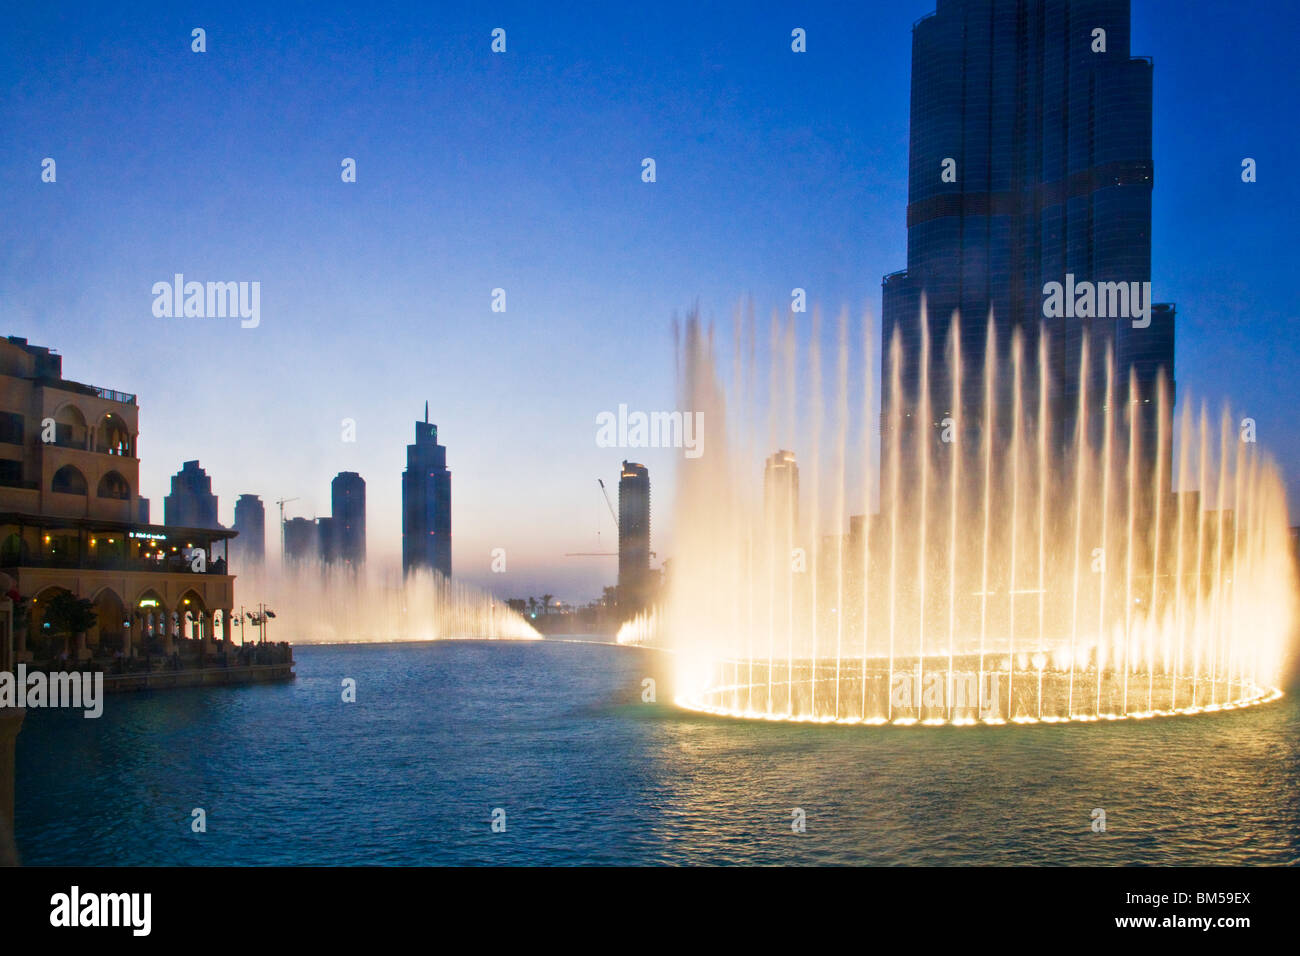 The Dubai Fountain display in front of the Burj Dubai or Khalifa, tallest building in the world, in downtown Dubai, UAE Stock Photo